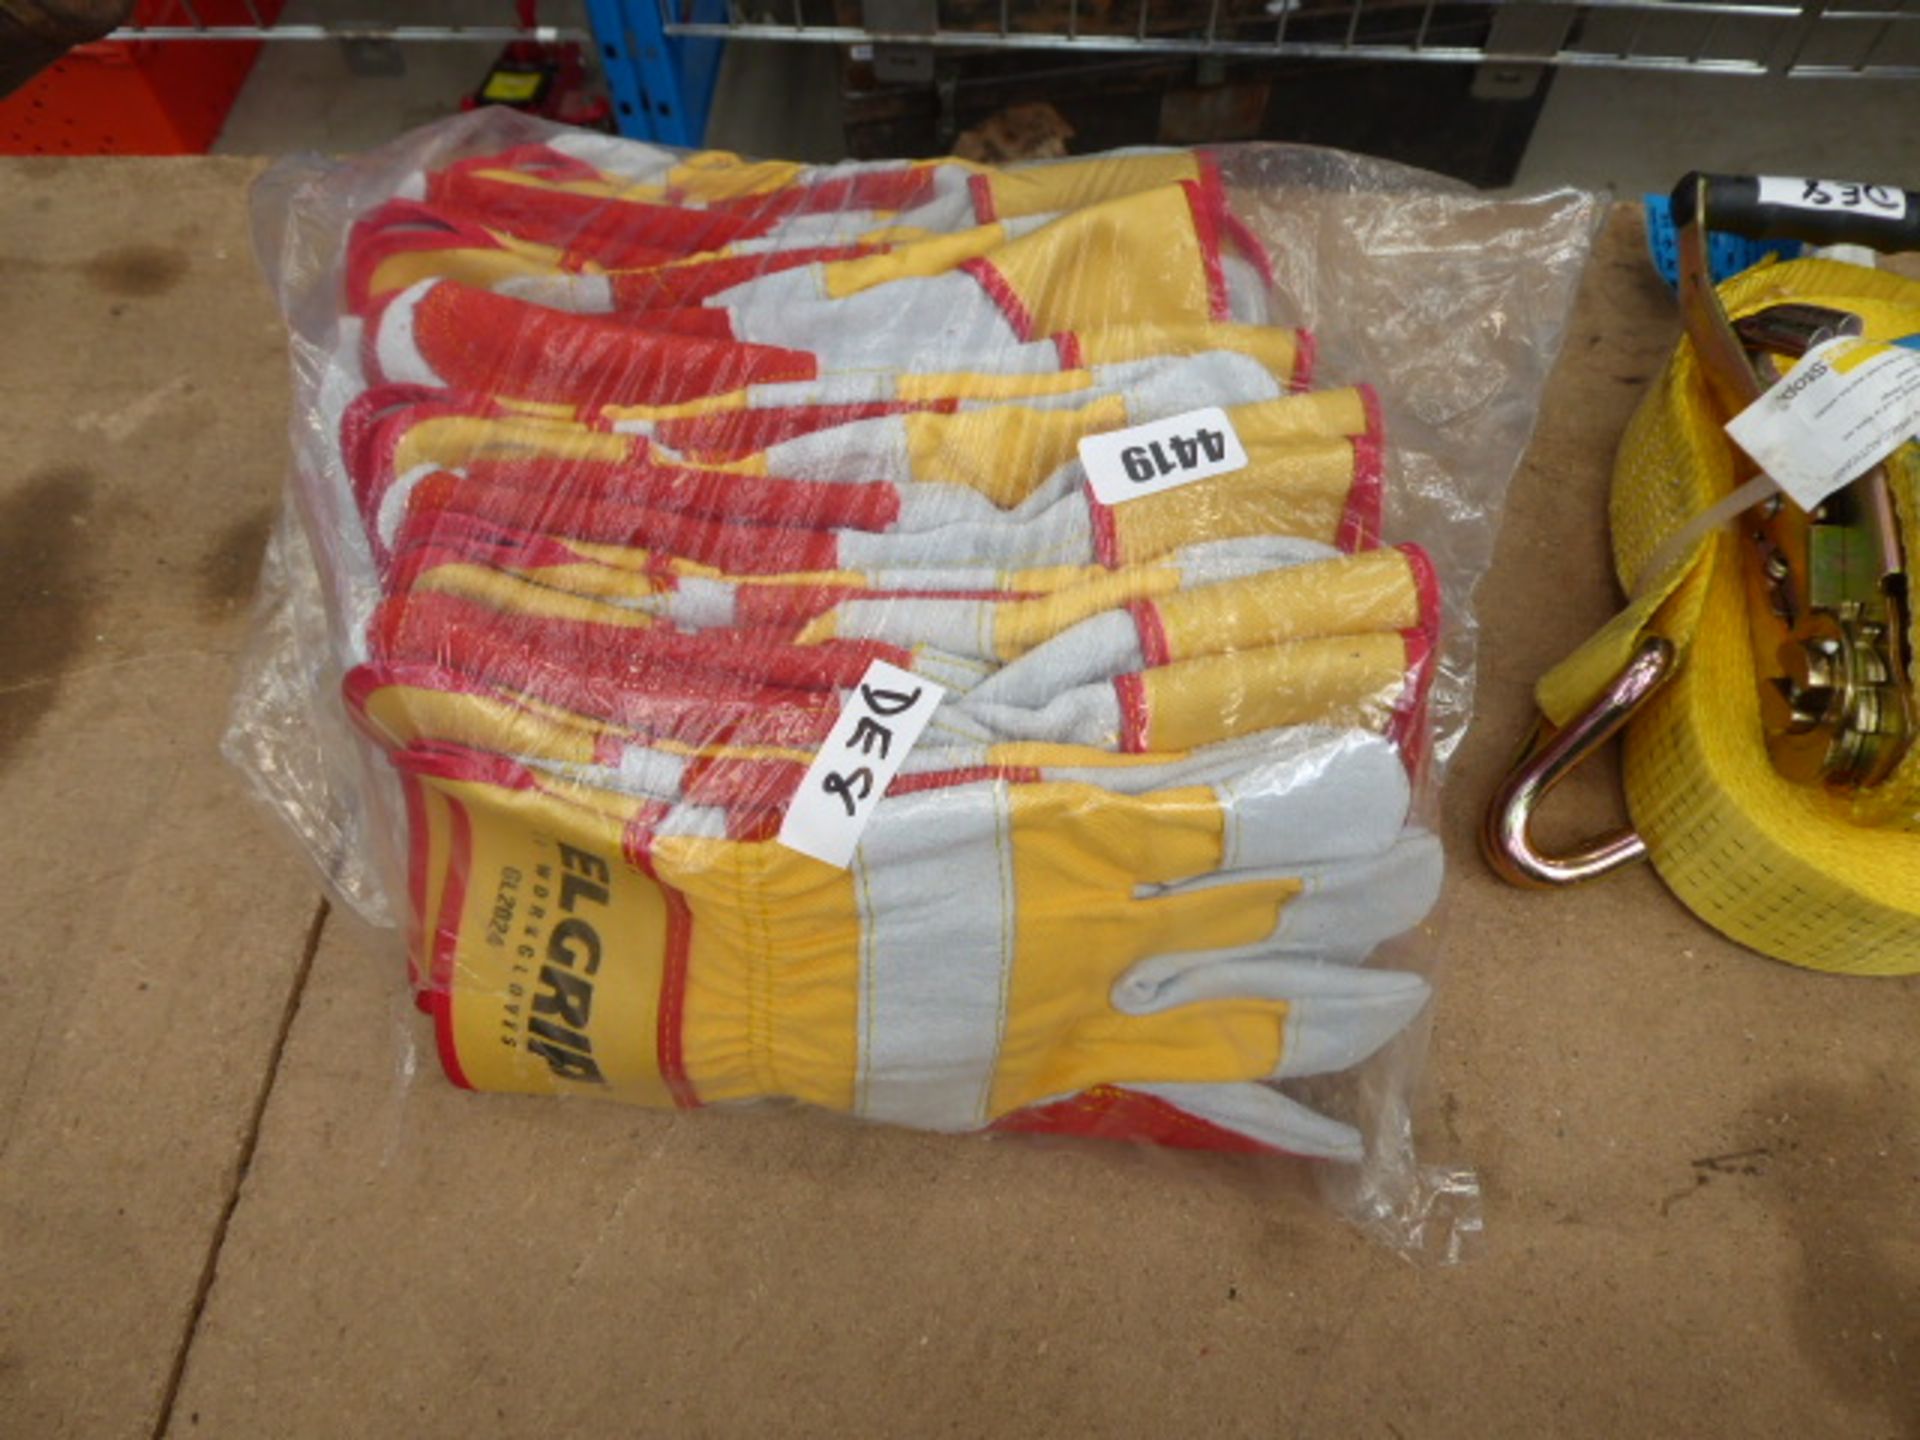 Pack of work gloves